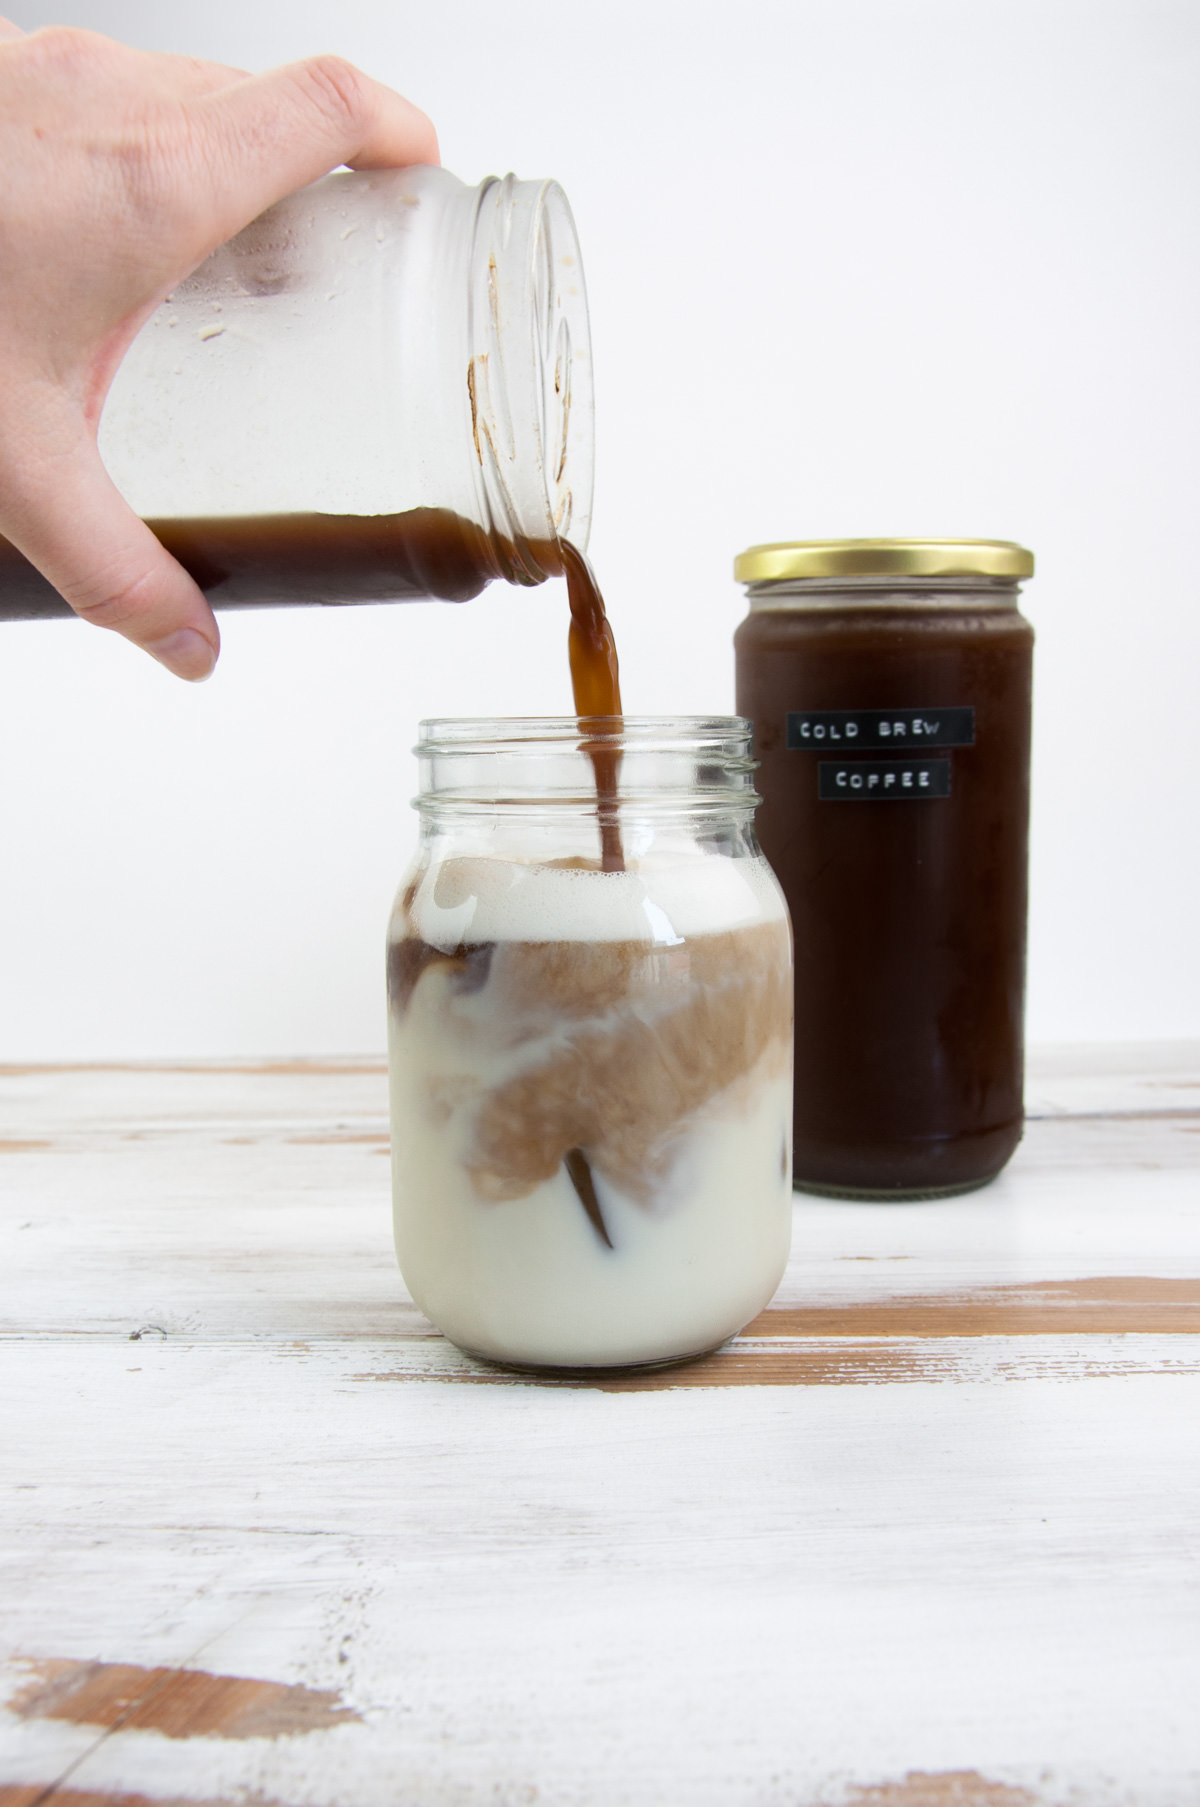 Cold Brew Coffee (in a blender) - Elephantastic Vegan